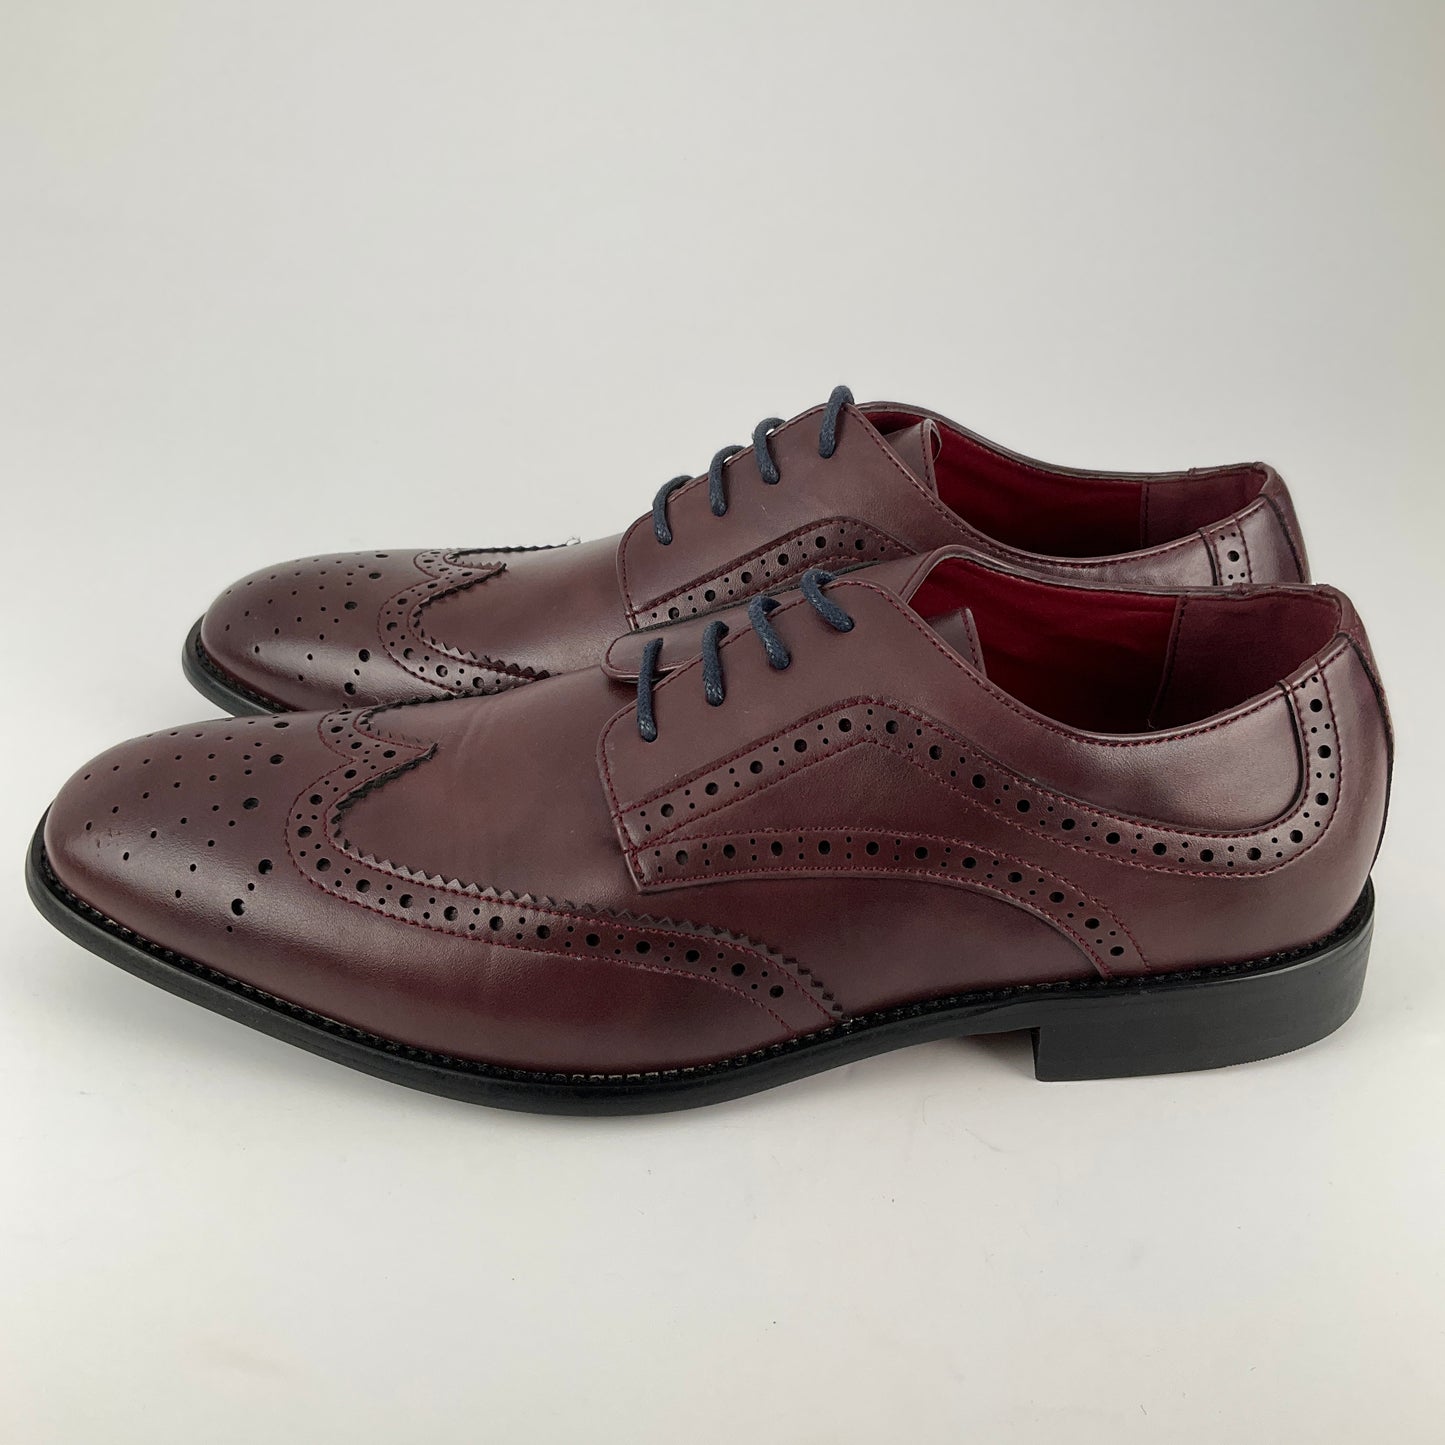 Sopranos - Dress Shoes - Size 8